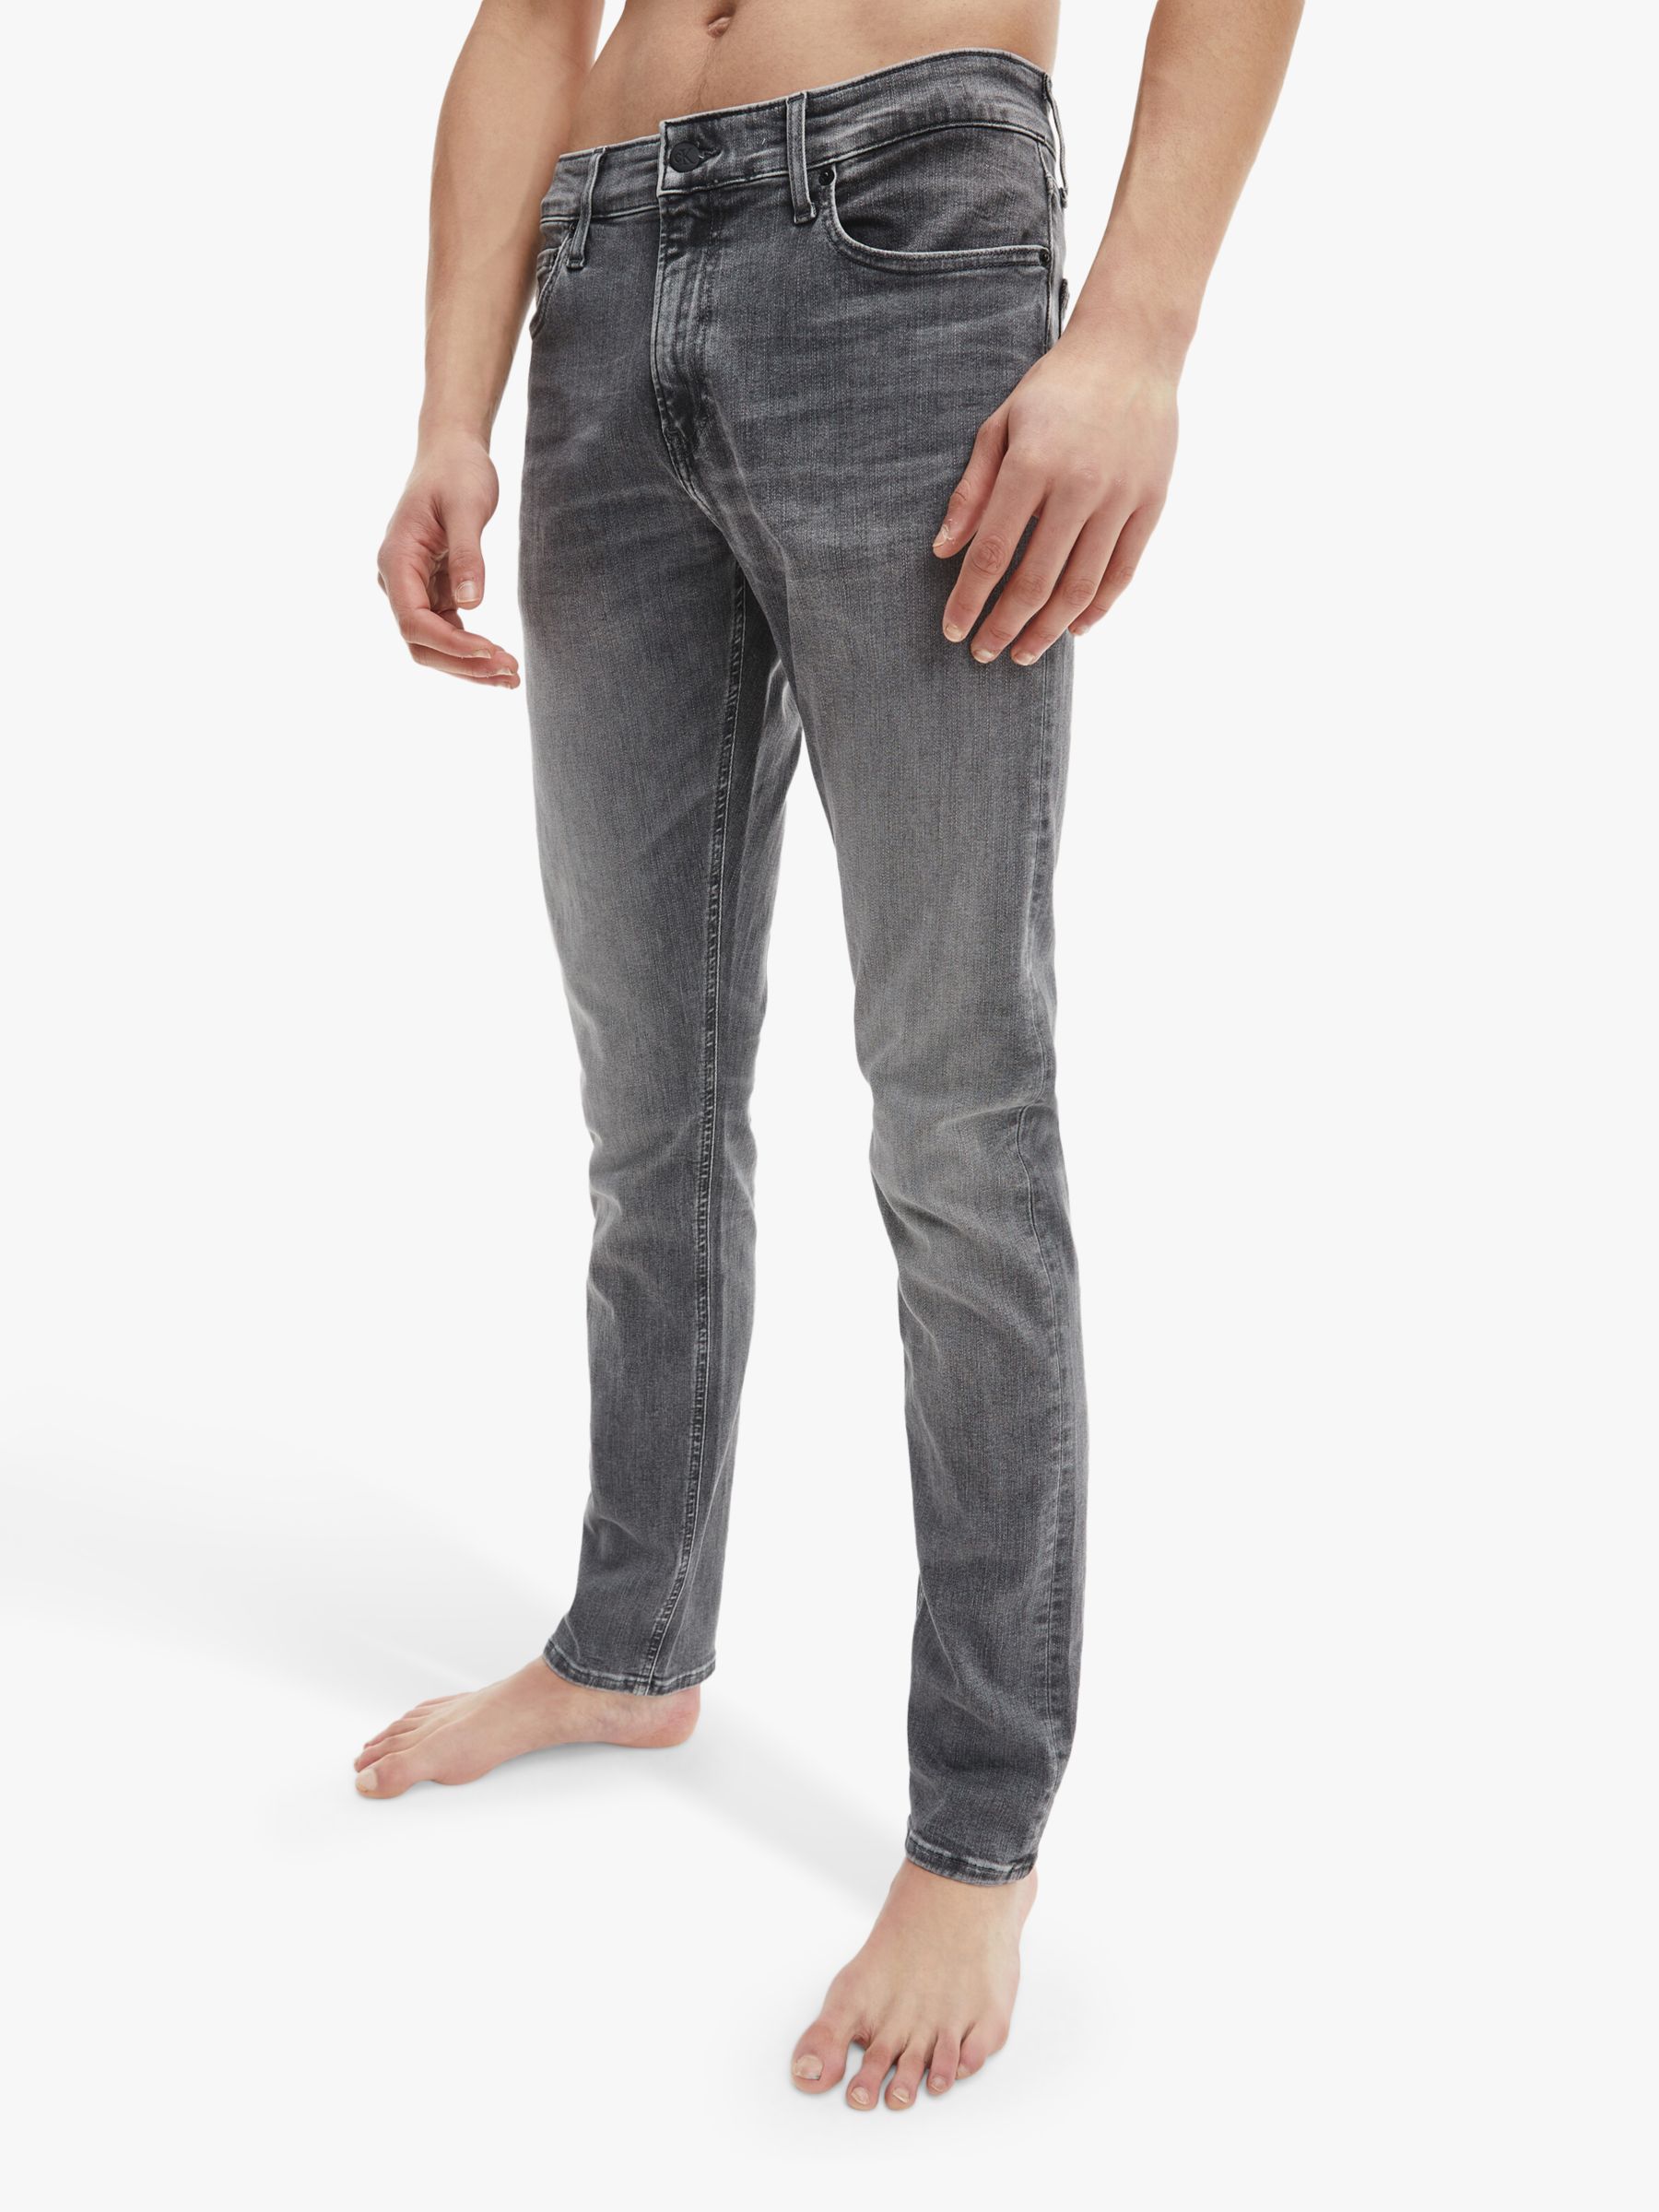 Calvin Klein Jeans Slim Fit Jeans, Denim Grey at John Lewis & Partners